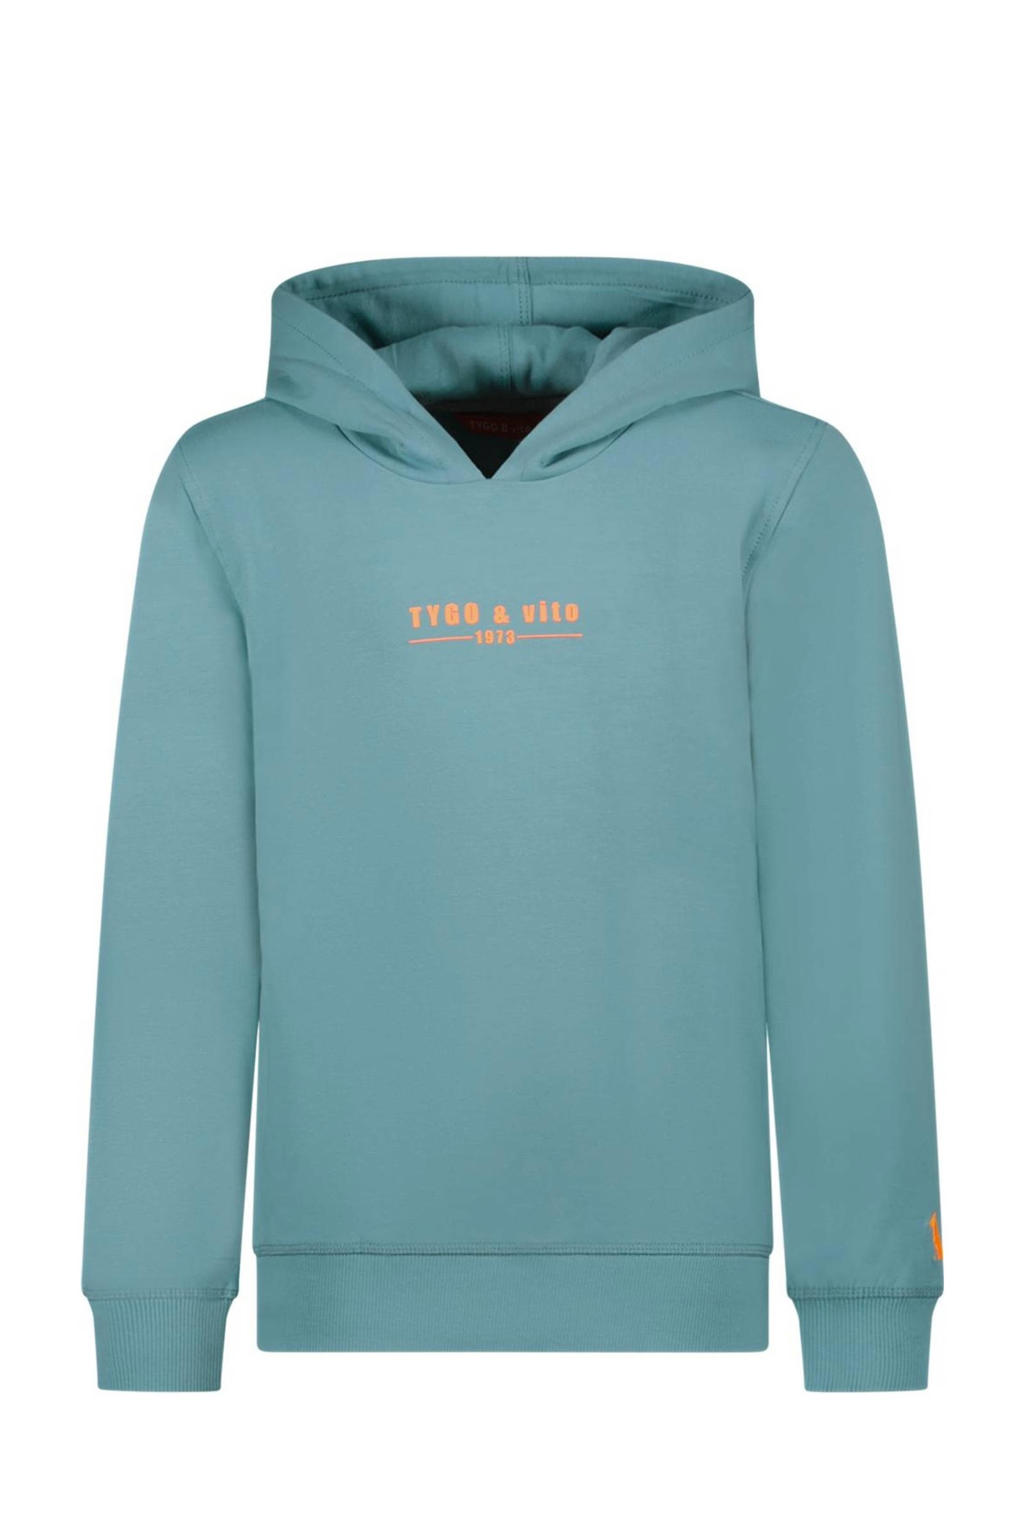 TYGO & vito hoodie Hugo met logo aqua blauw